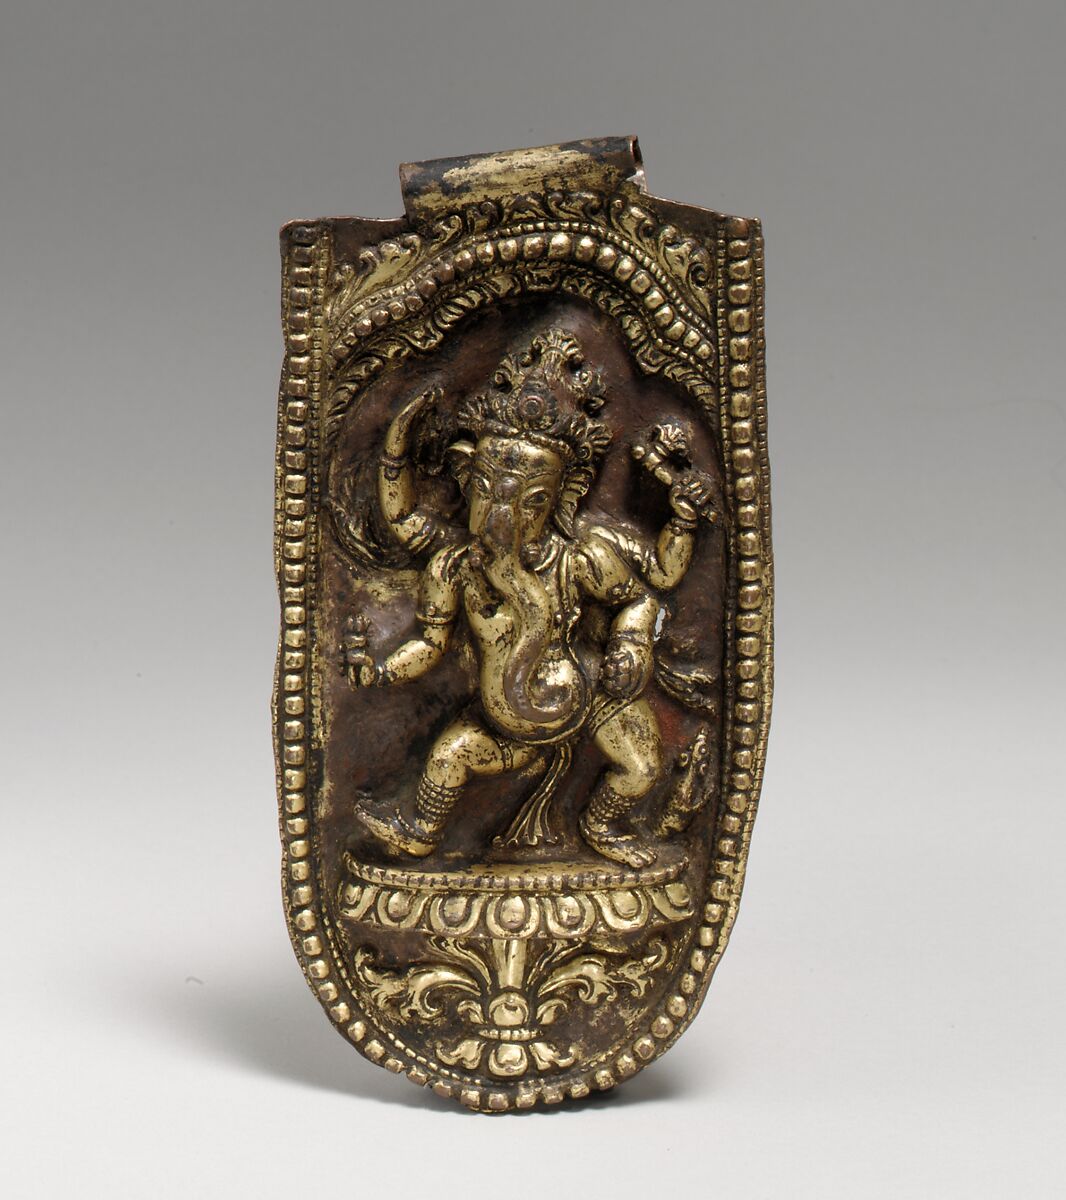 Four-Armed Ganesha Dancing, Gilt-copper alloy, Nepal (Kathmandu Valley) 